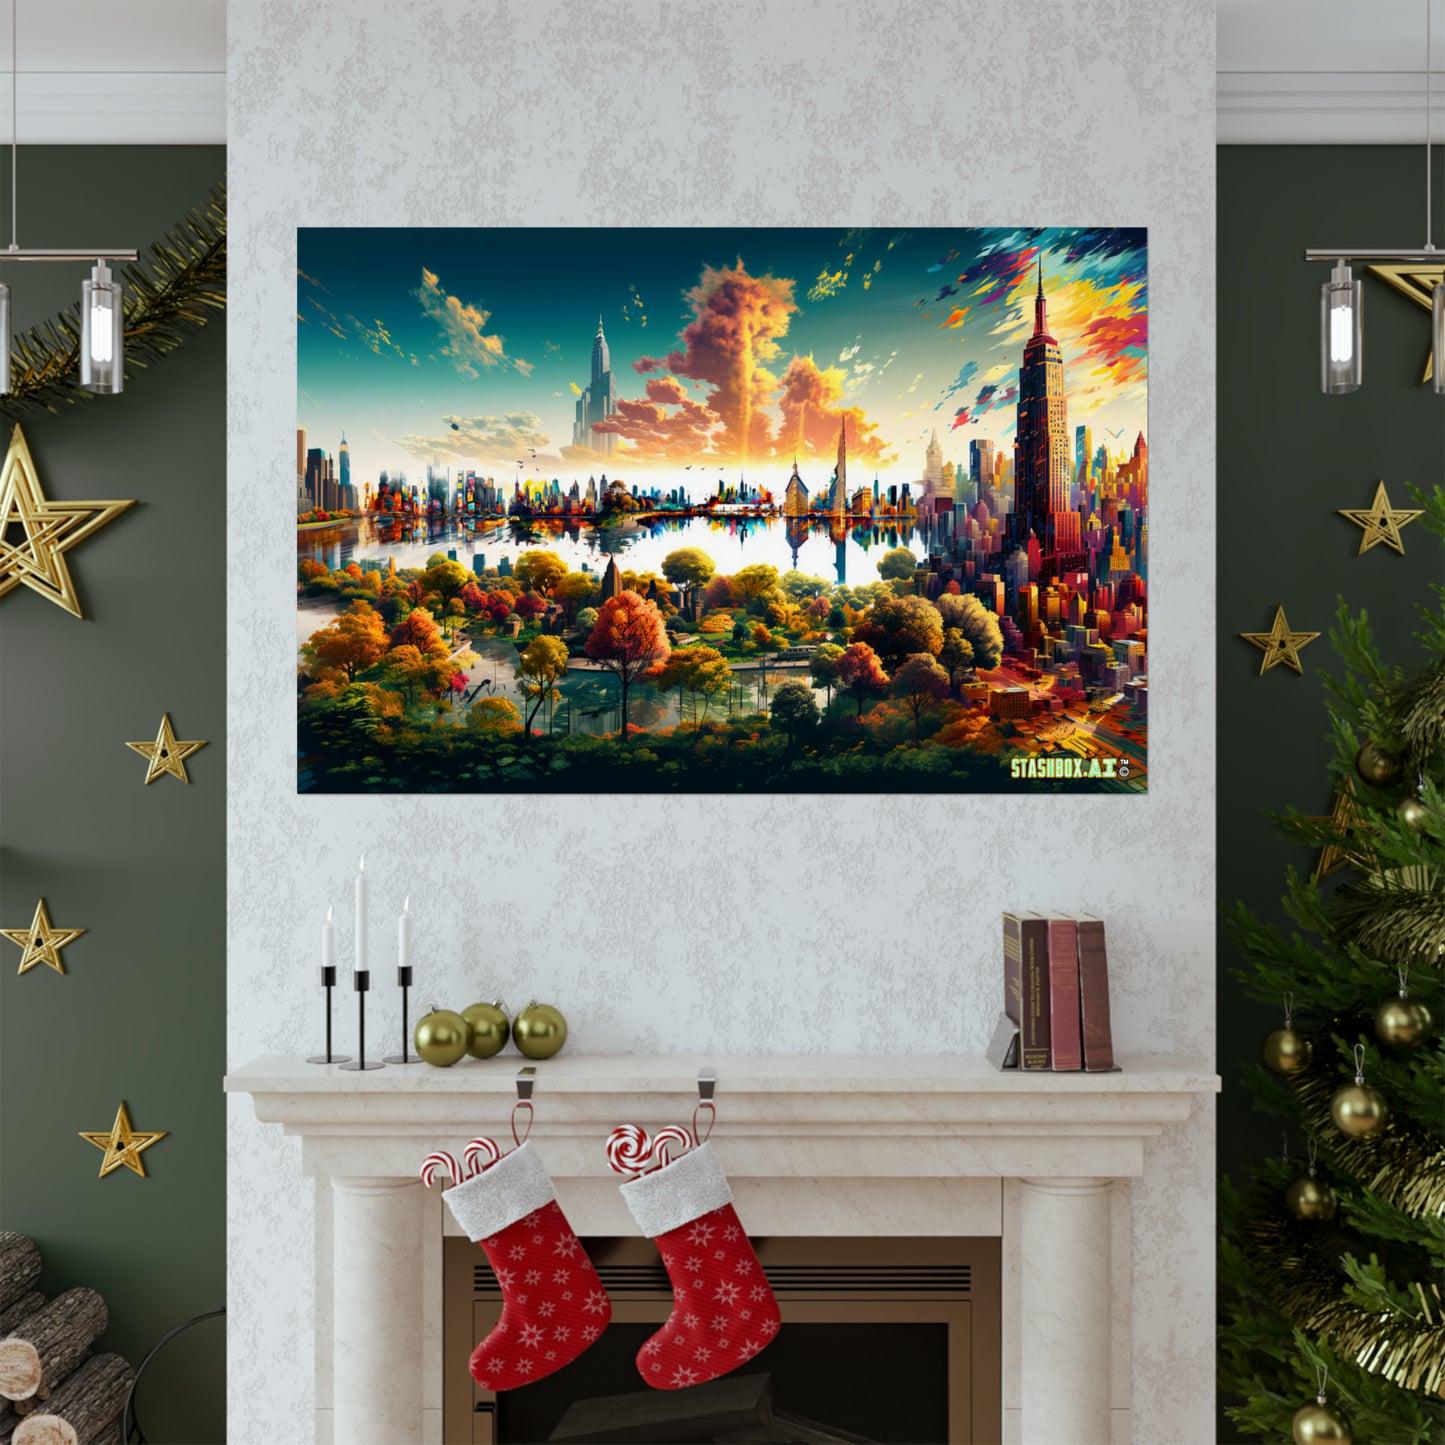 Surreal Cityscape Matte Poster - Stashbox Exclusive - #DreamyNYC #SurrealArt #CityscapeMagic #StashboxDesign #ArtisticPrint